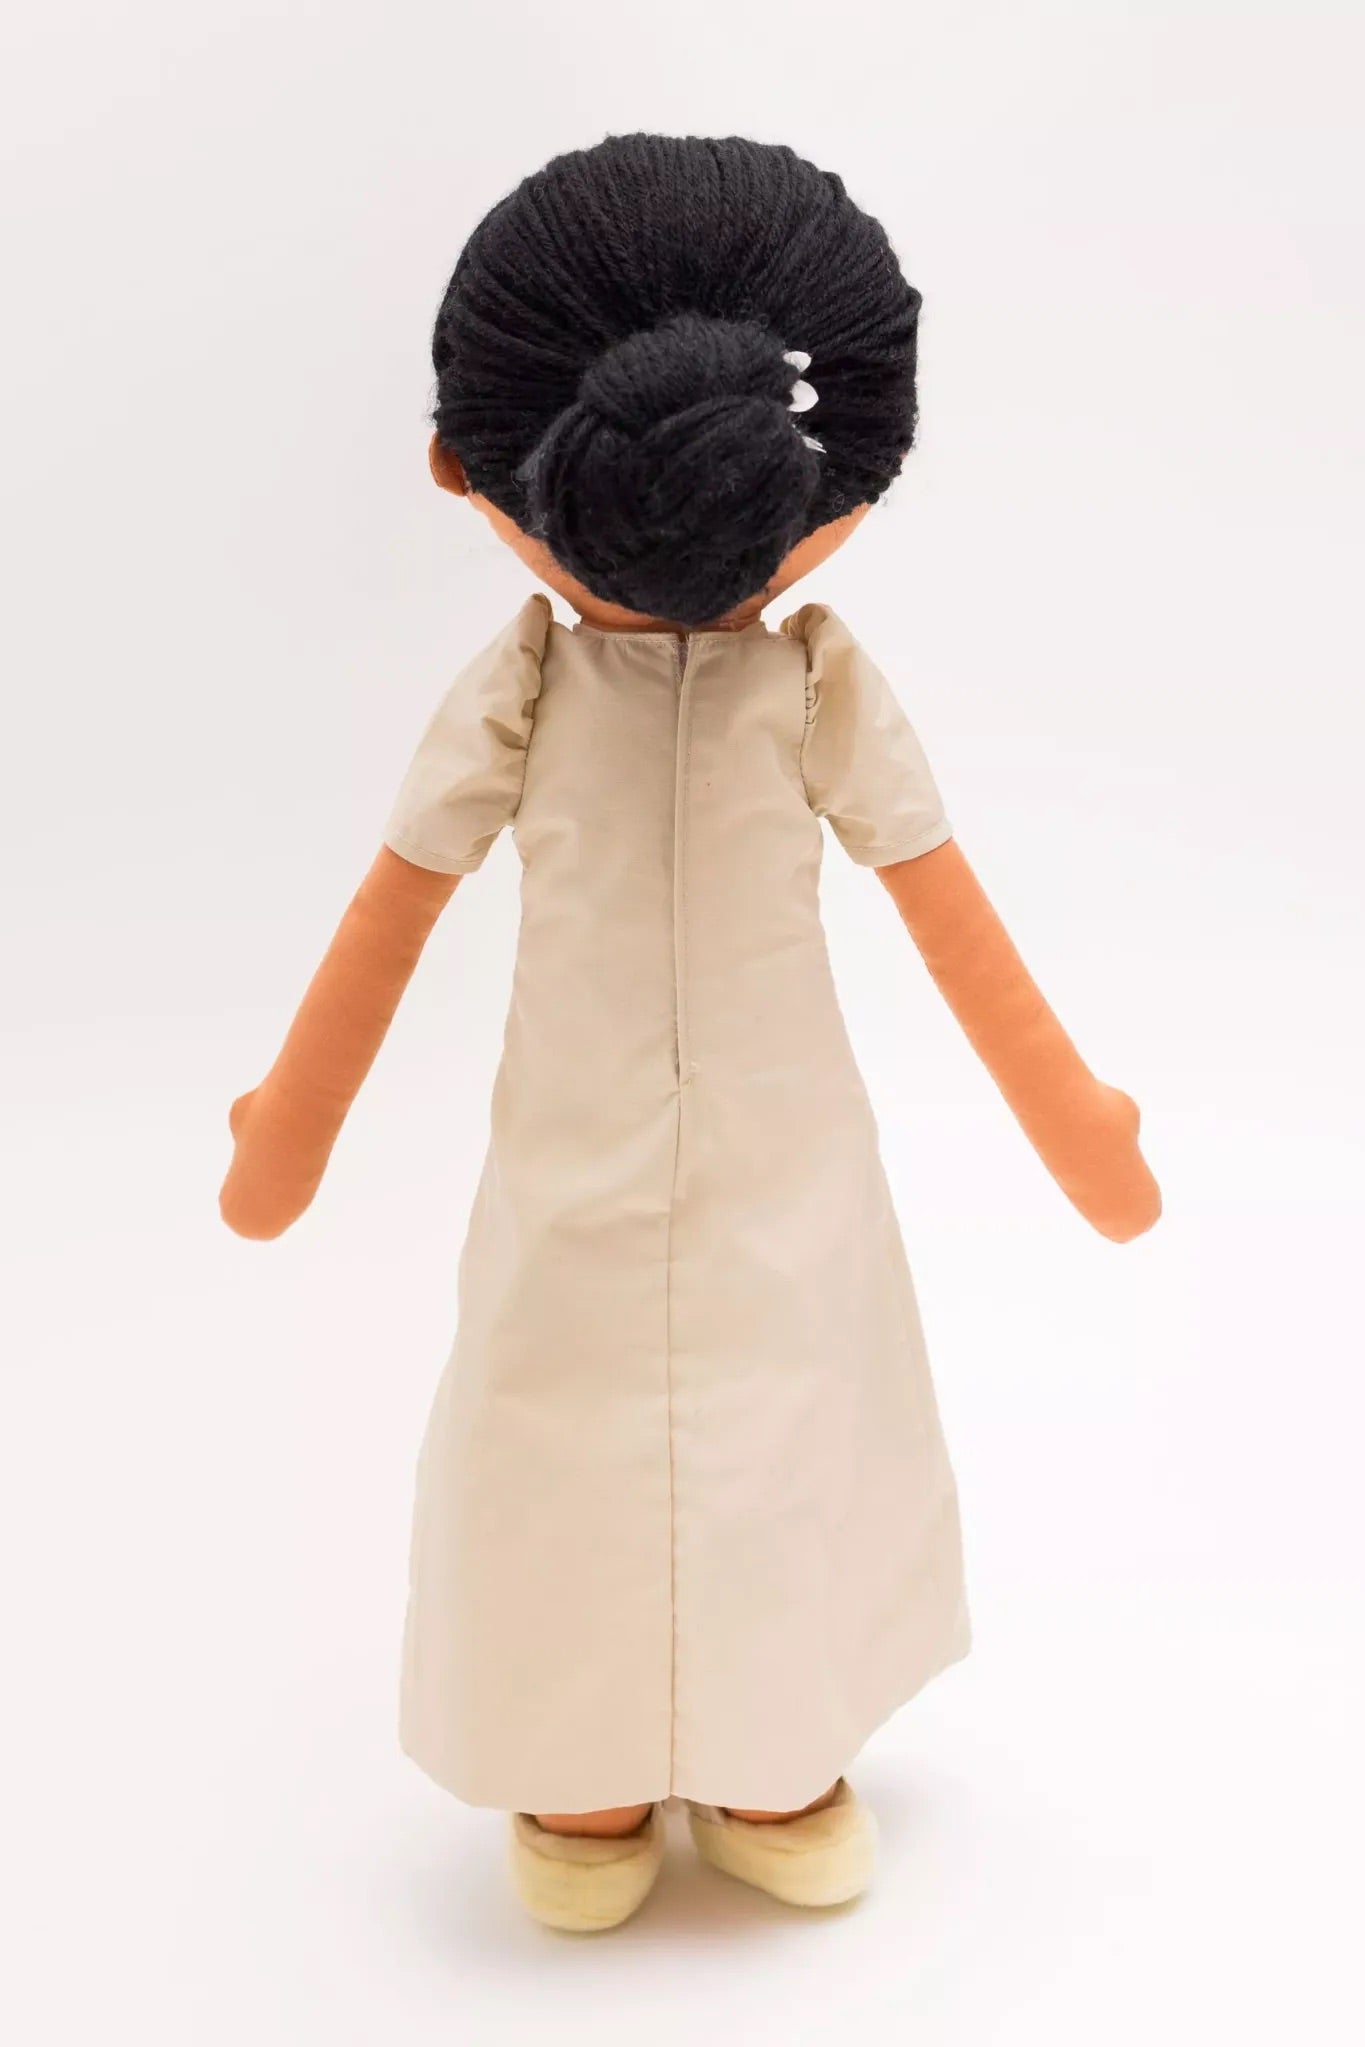 Filipina 'Malaya' Cultural Doll